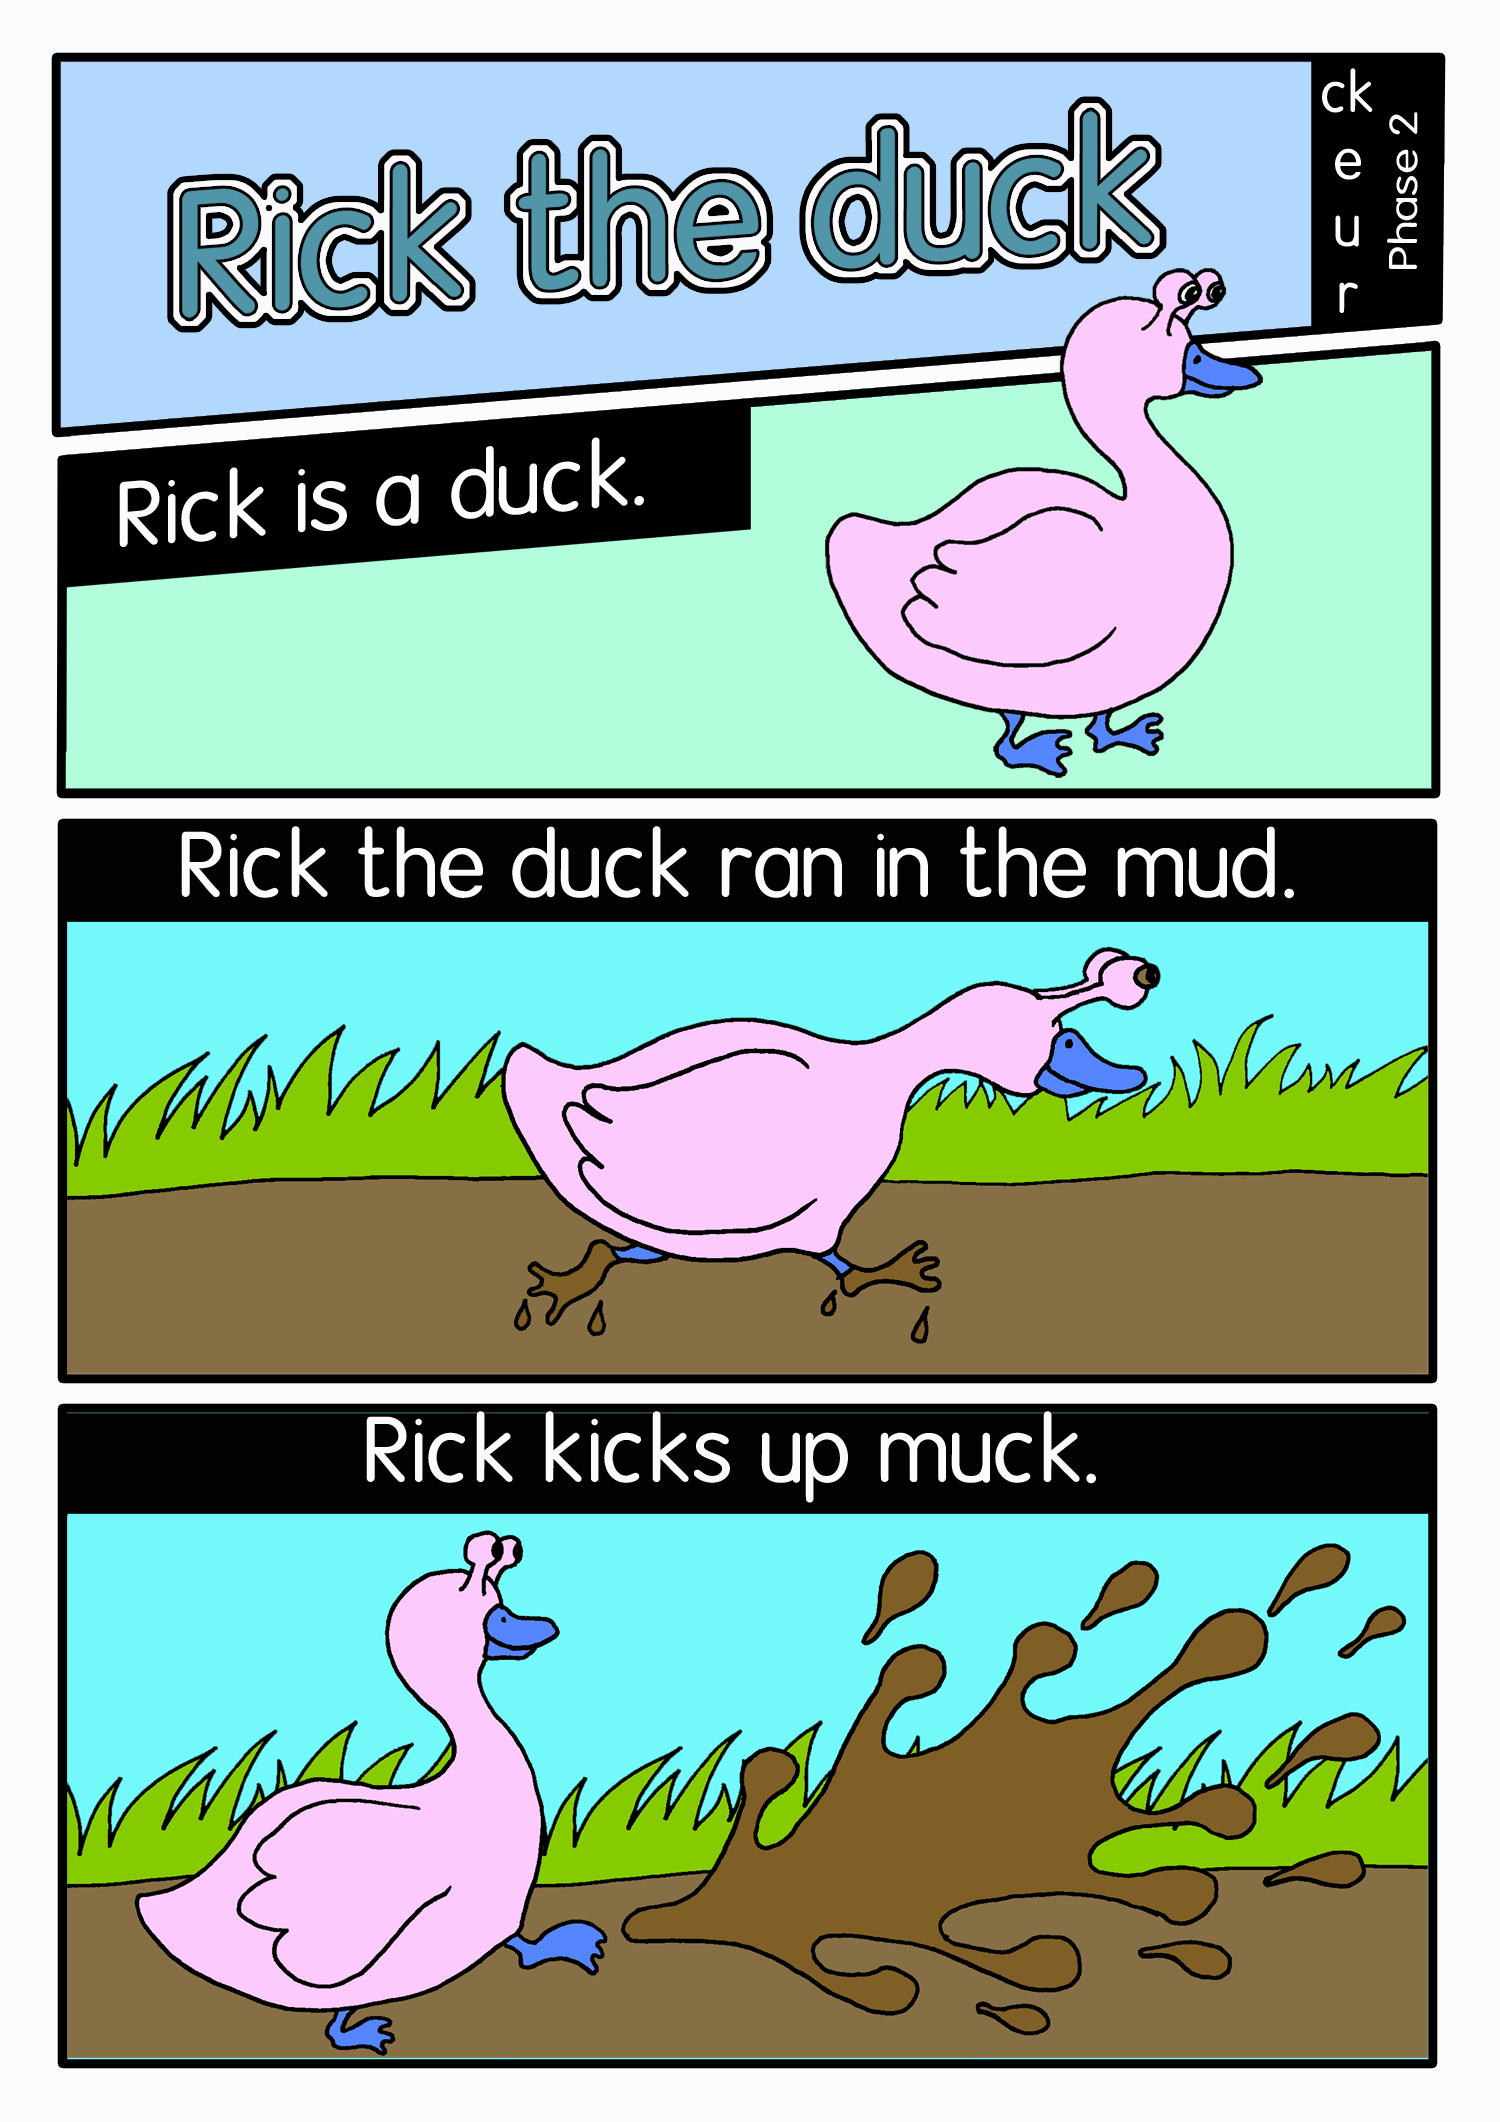 Rick the duck comic panel1